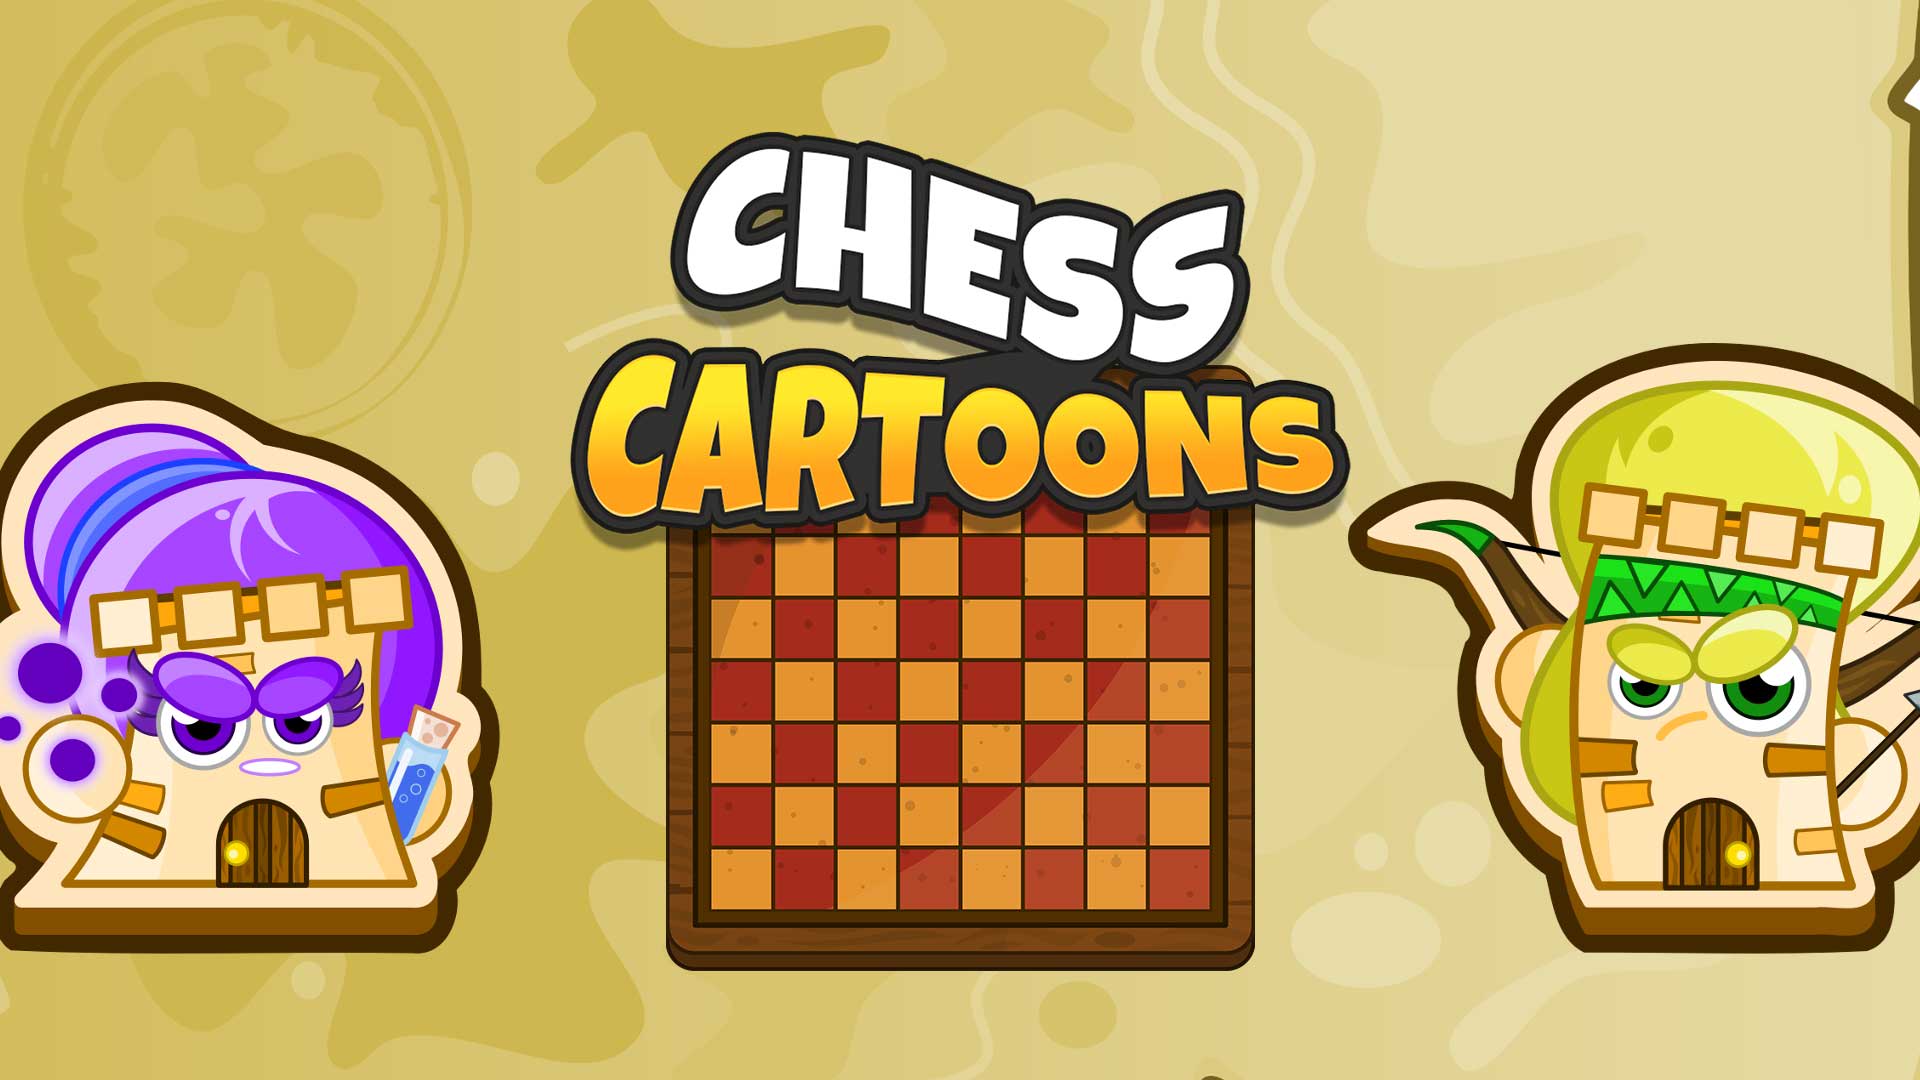 Chess Cartoons